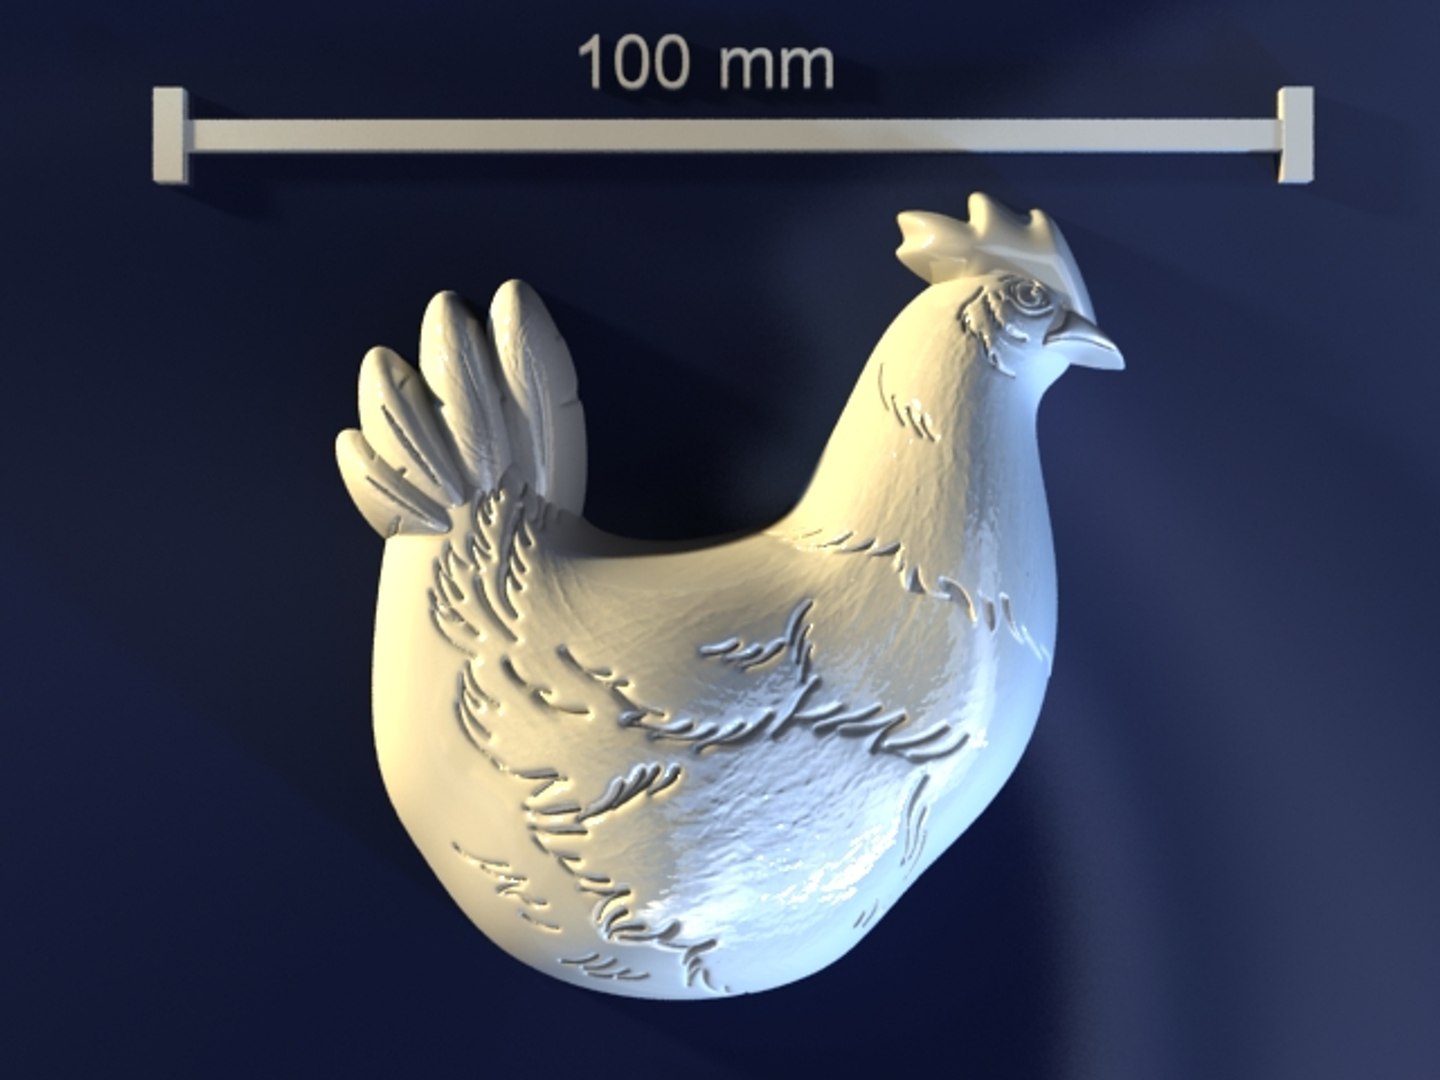 3d chicken mold hand model https://p.turbosquid.com/ts-thumb/XF/uo1swk/JE3svsgQ/chiken0000/jpg/1442562530/1920x1080/fit_q87/f39712279ea185a863df38933d4959b04be5447e/chiken0000.jpg